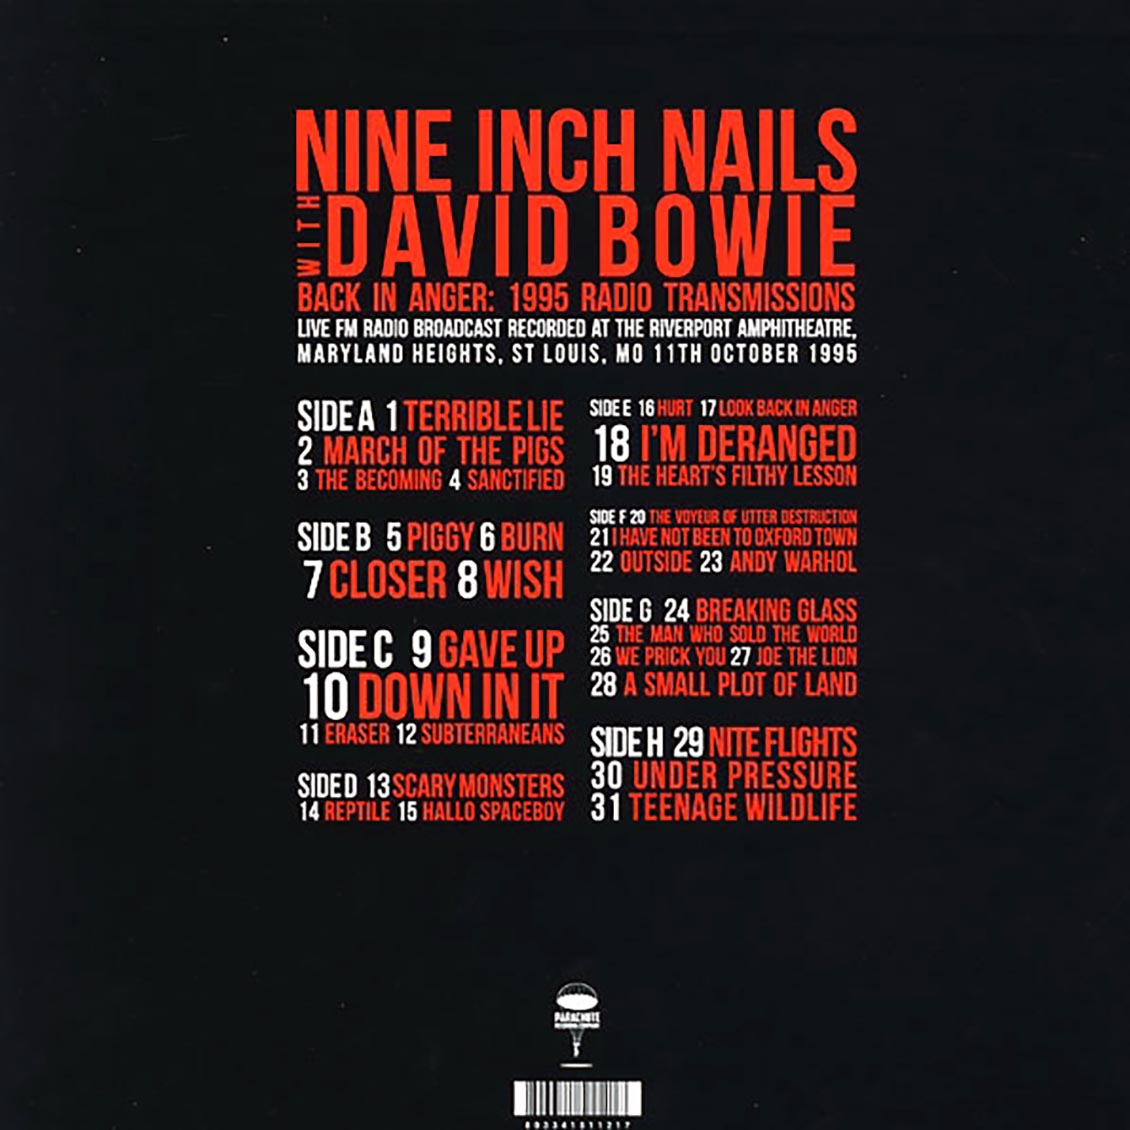 Nine Inch Nails, David Bowie - Back In Anger: 1995 Radio Transmissions (4xLP) (box set) - Vinyl LP, LP